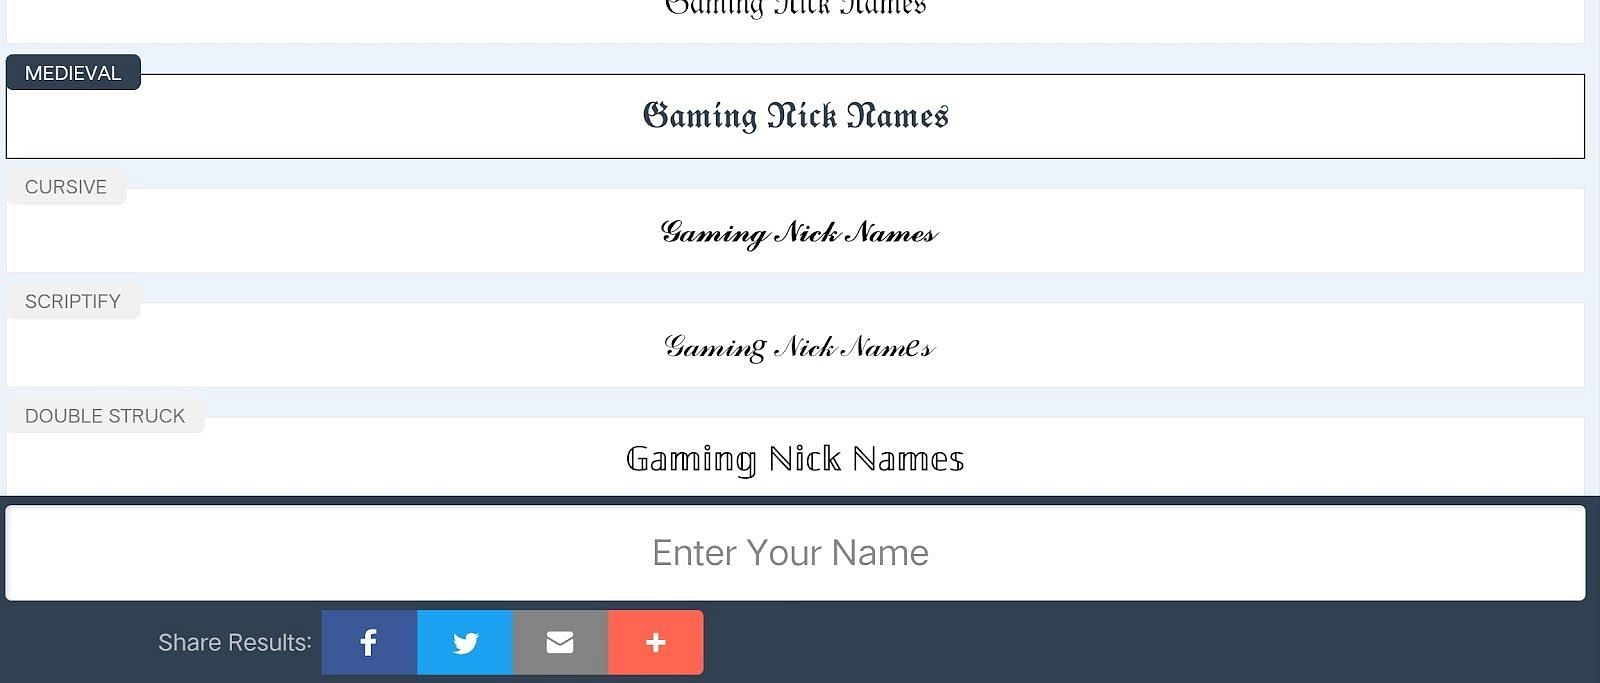 Free Fire guild name suggestions (Image via gamingnicknames.com)